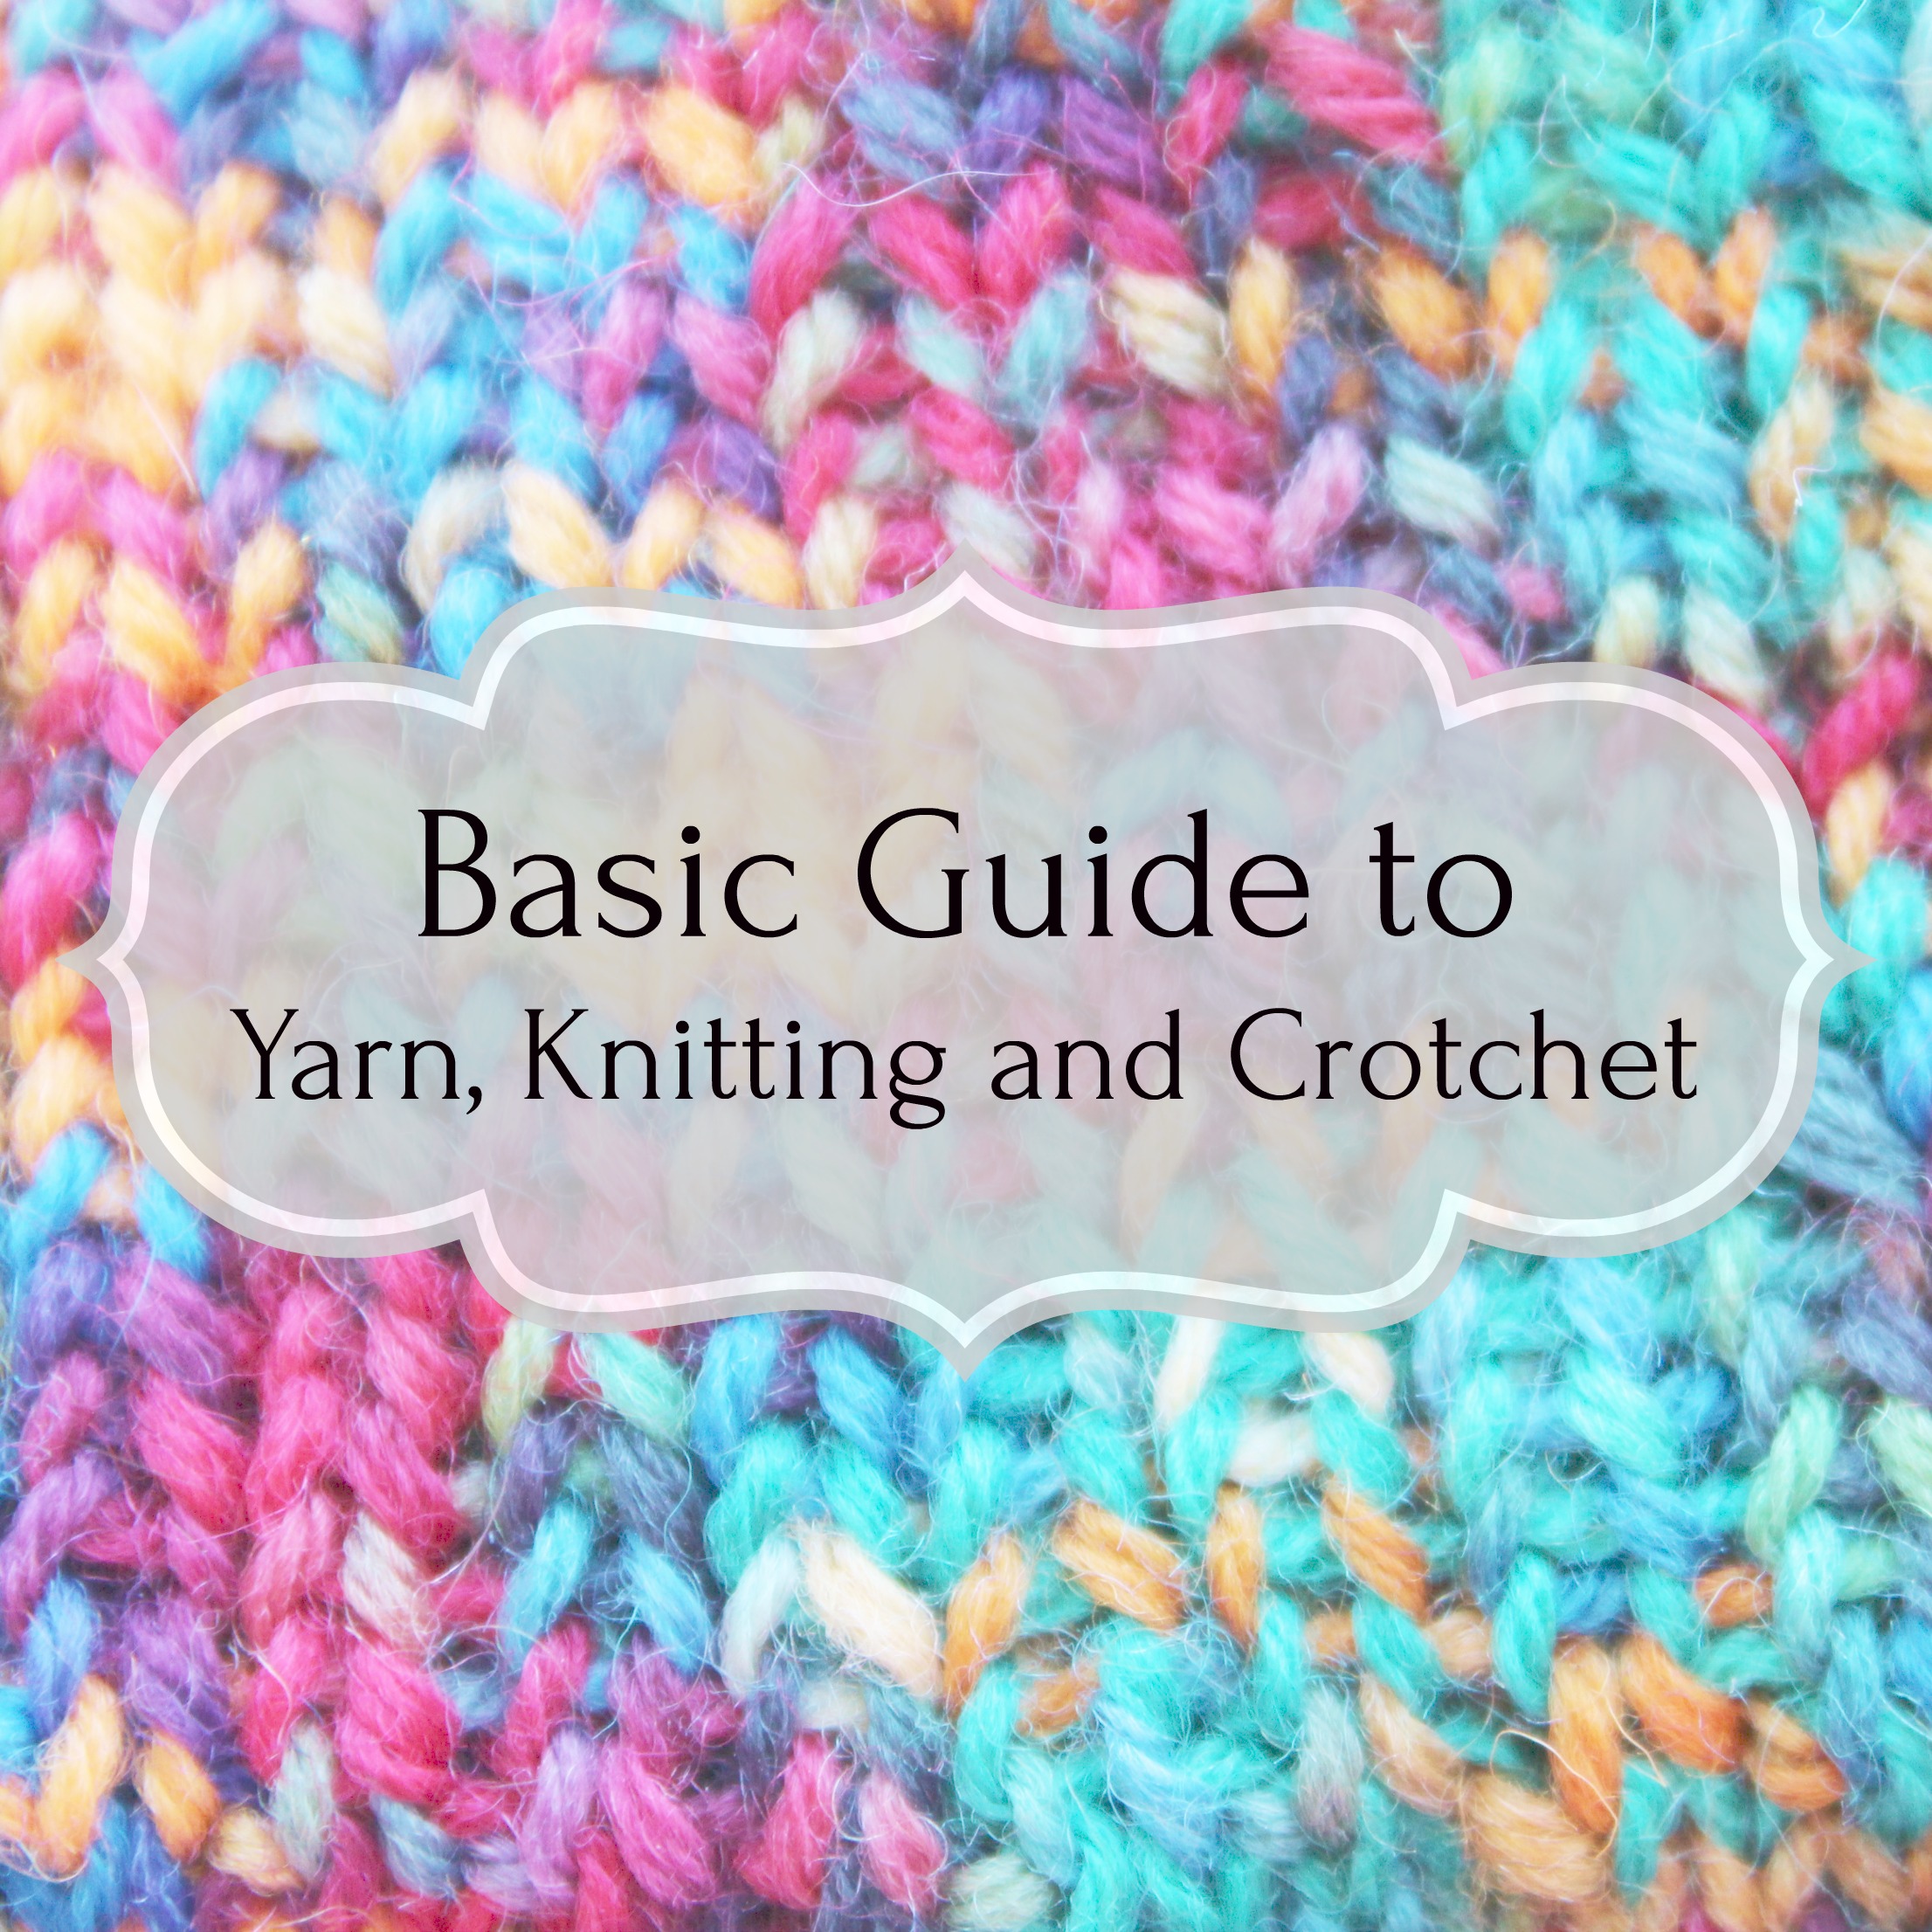 Basic Guide to Yarn, Knitting and Crotchet